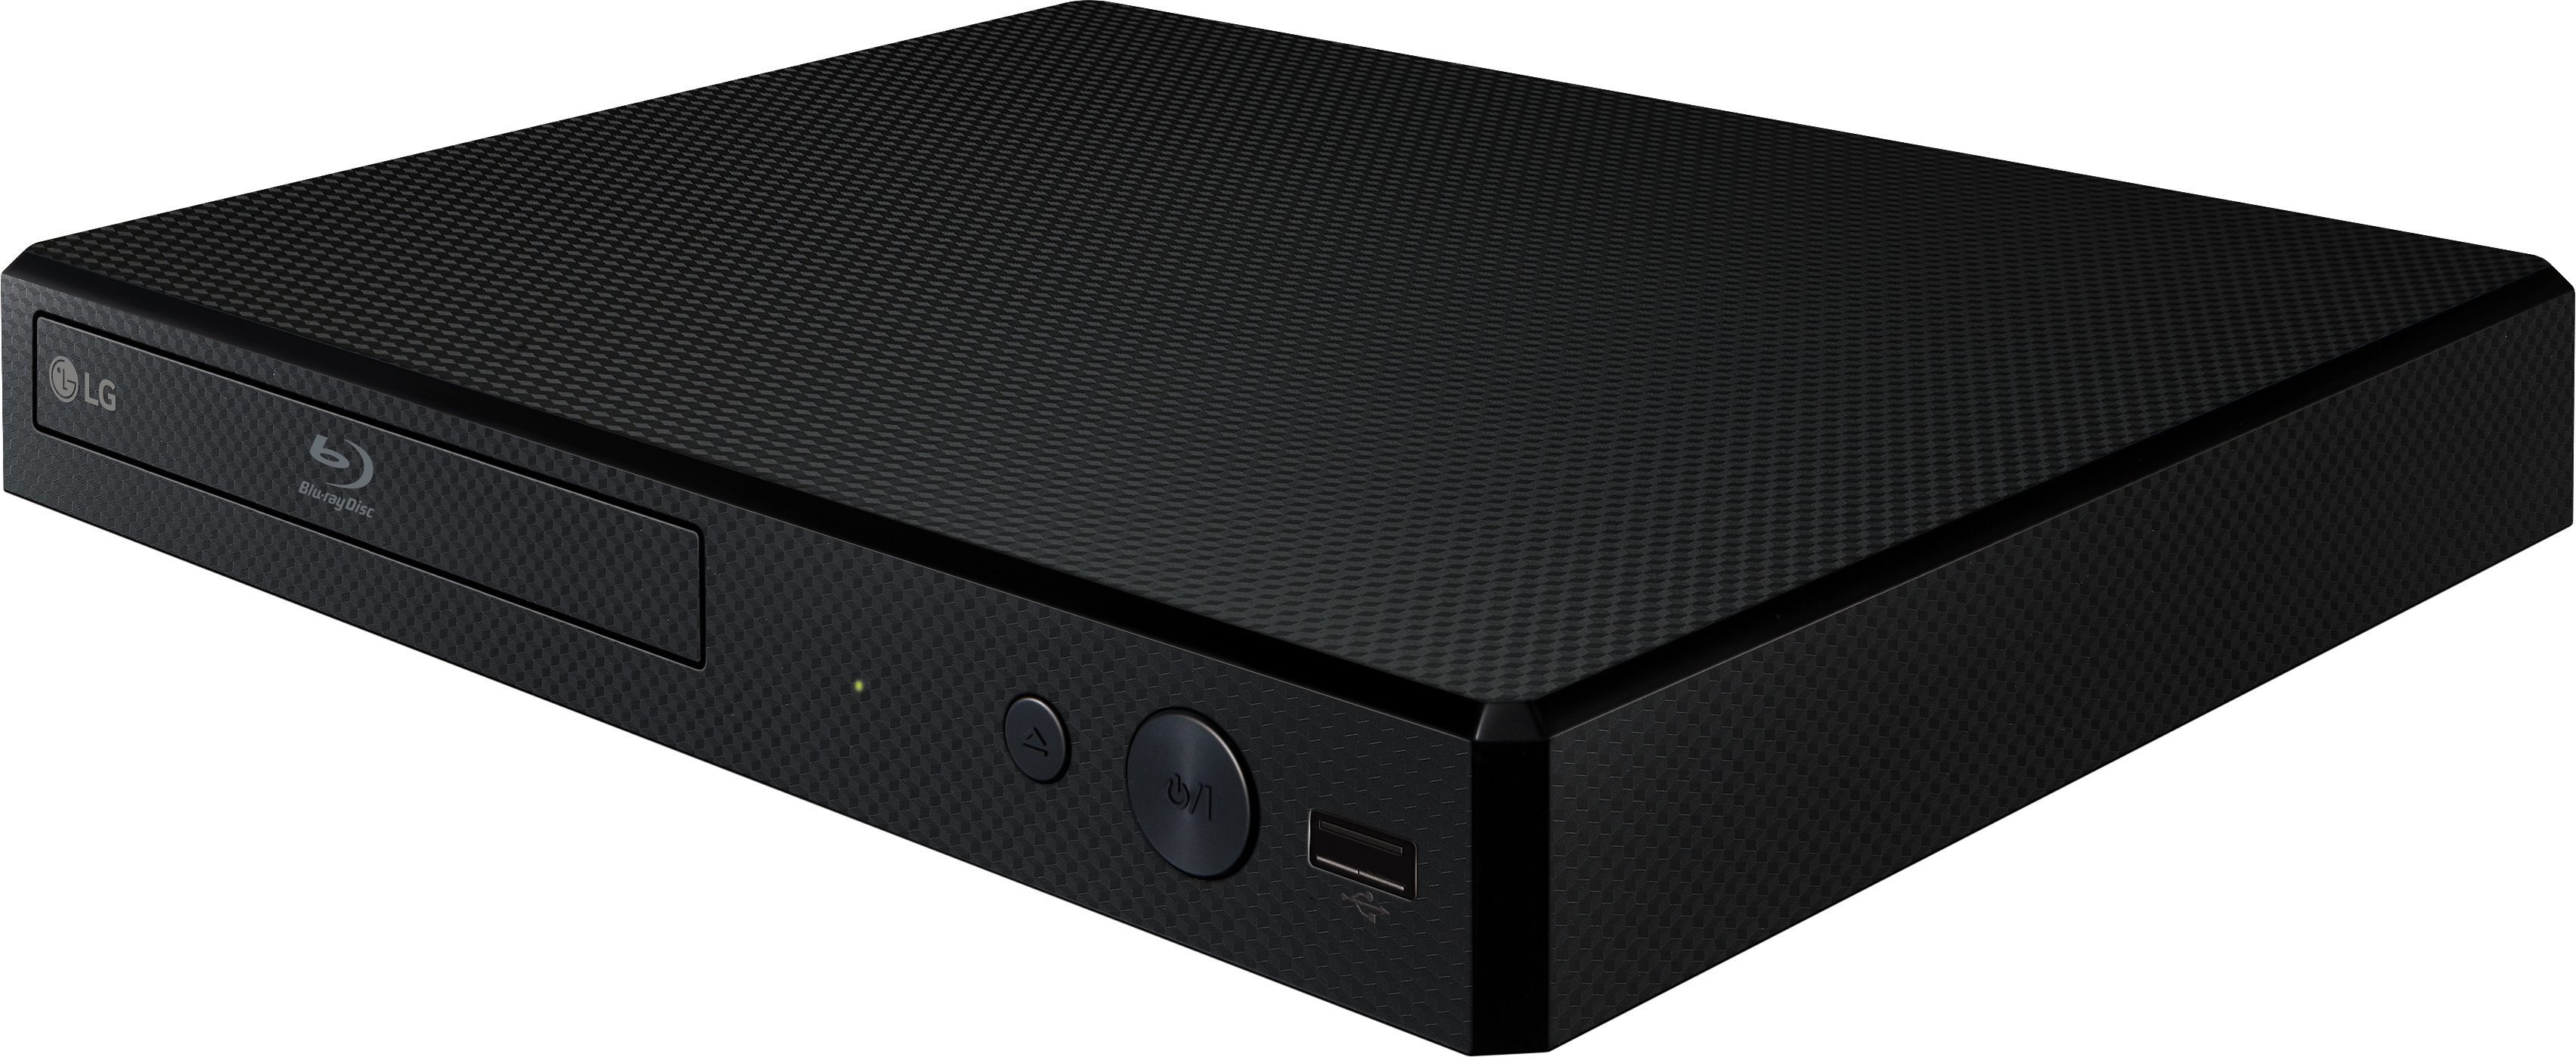 LG BP250 Blu-ray-Player (Full HD Upscaling, HDMI und USB, kompatibel zu  externer Festplatte)